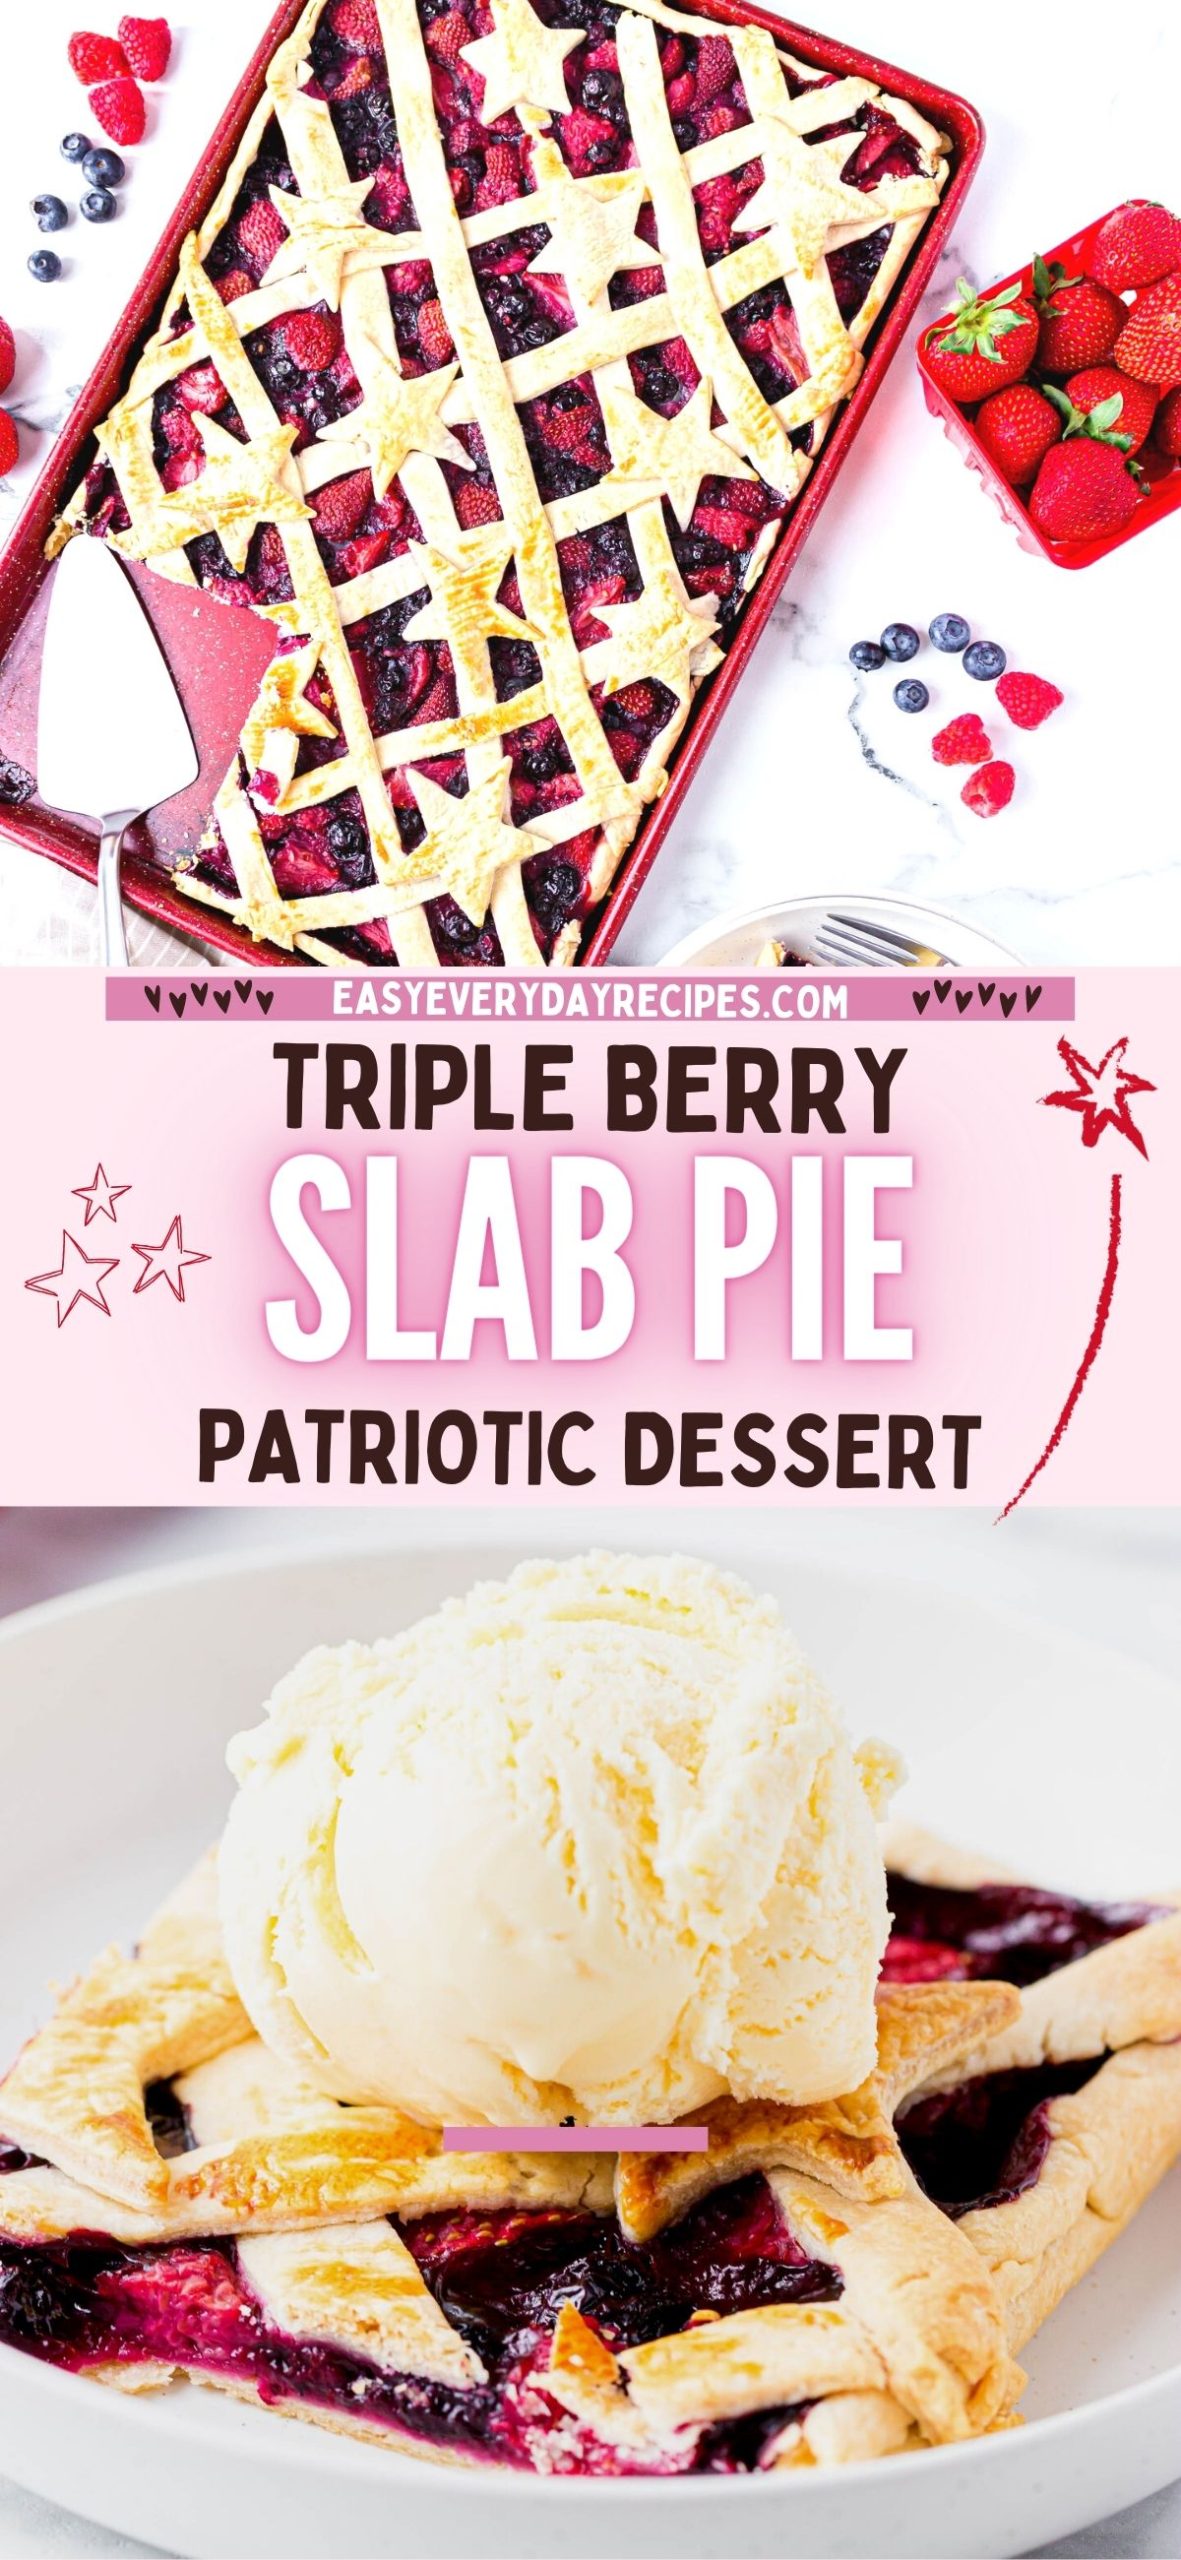 Triple berry slab pie patriotic dessert.